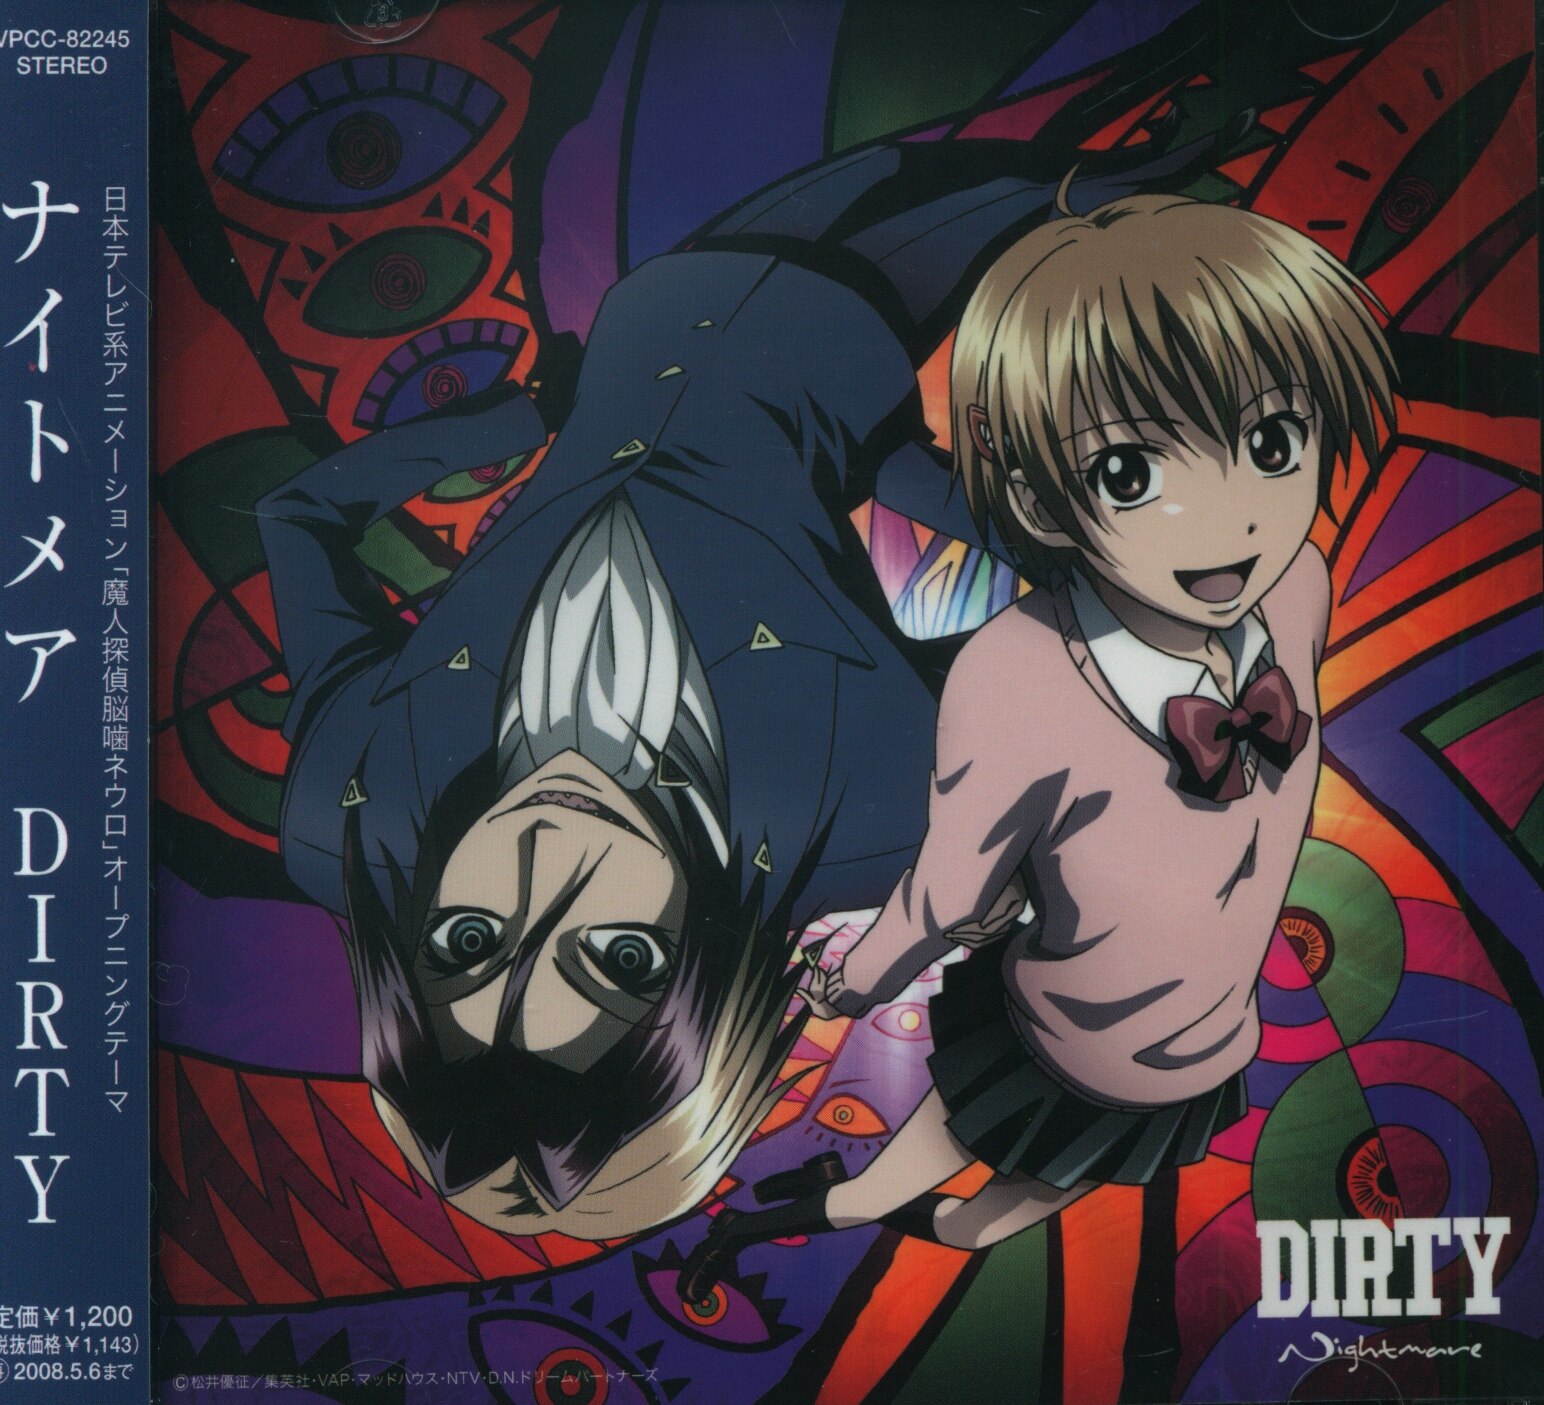 Anime CD Nightmare / DIRTY TV Anime 